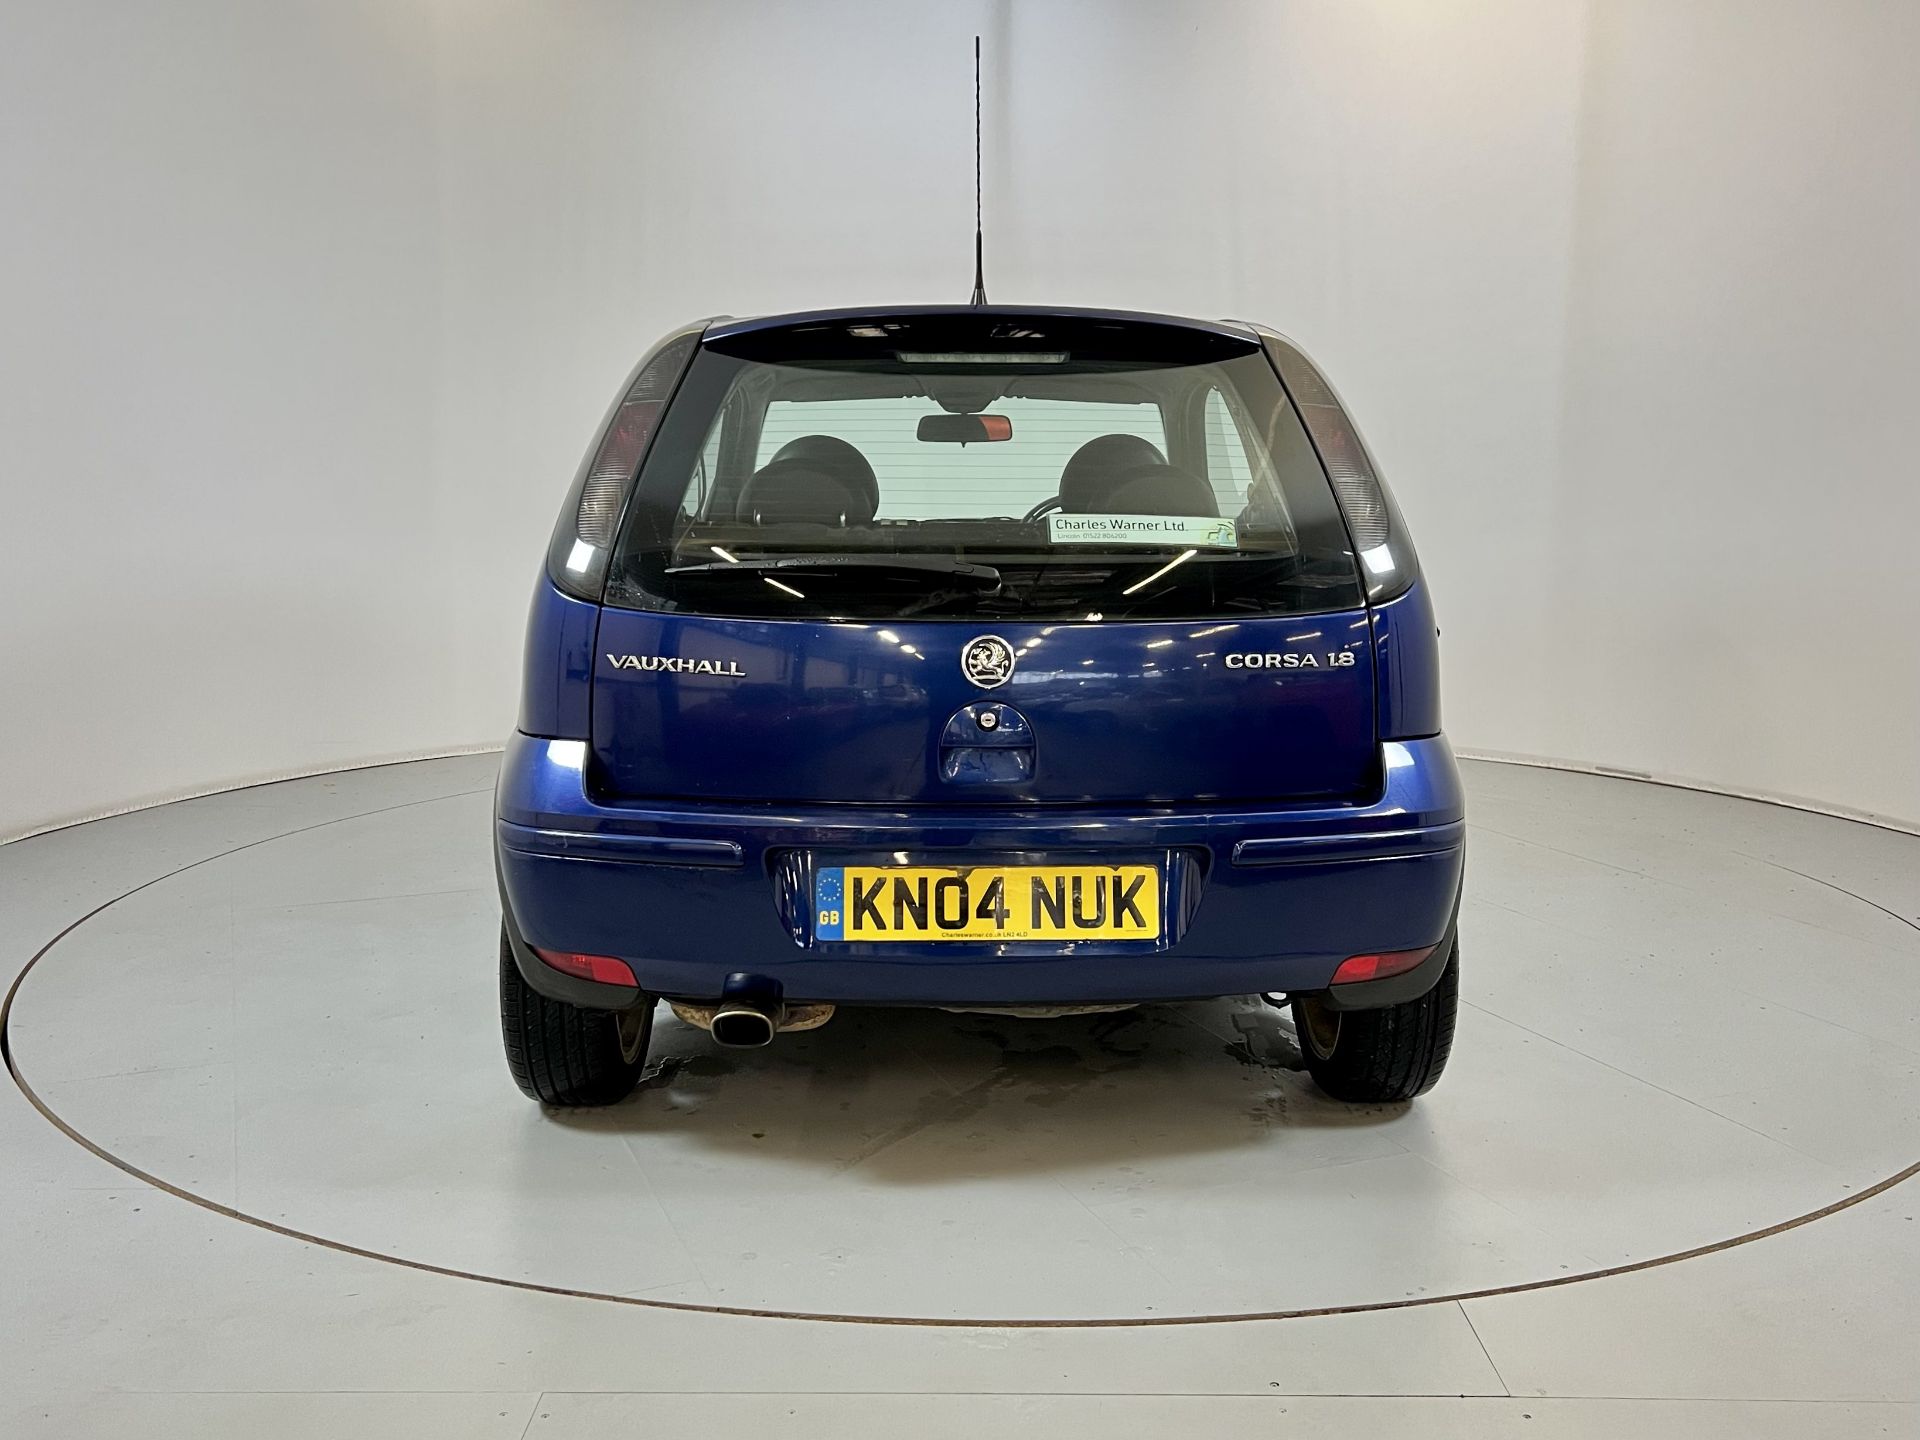 Vauxhall Corsa 1.8 SRI - Image 8 of 28